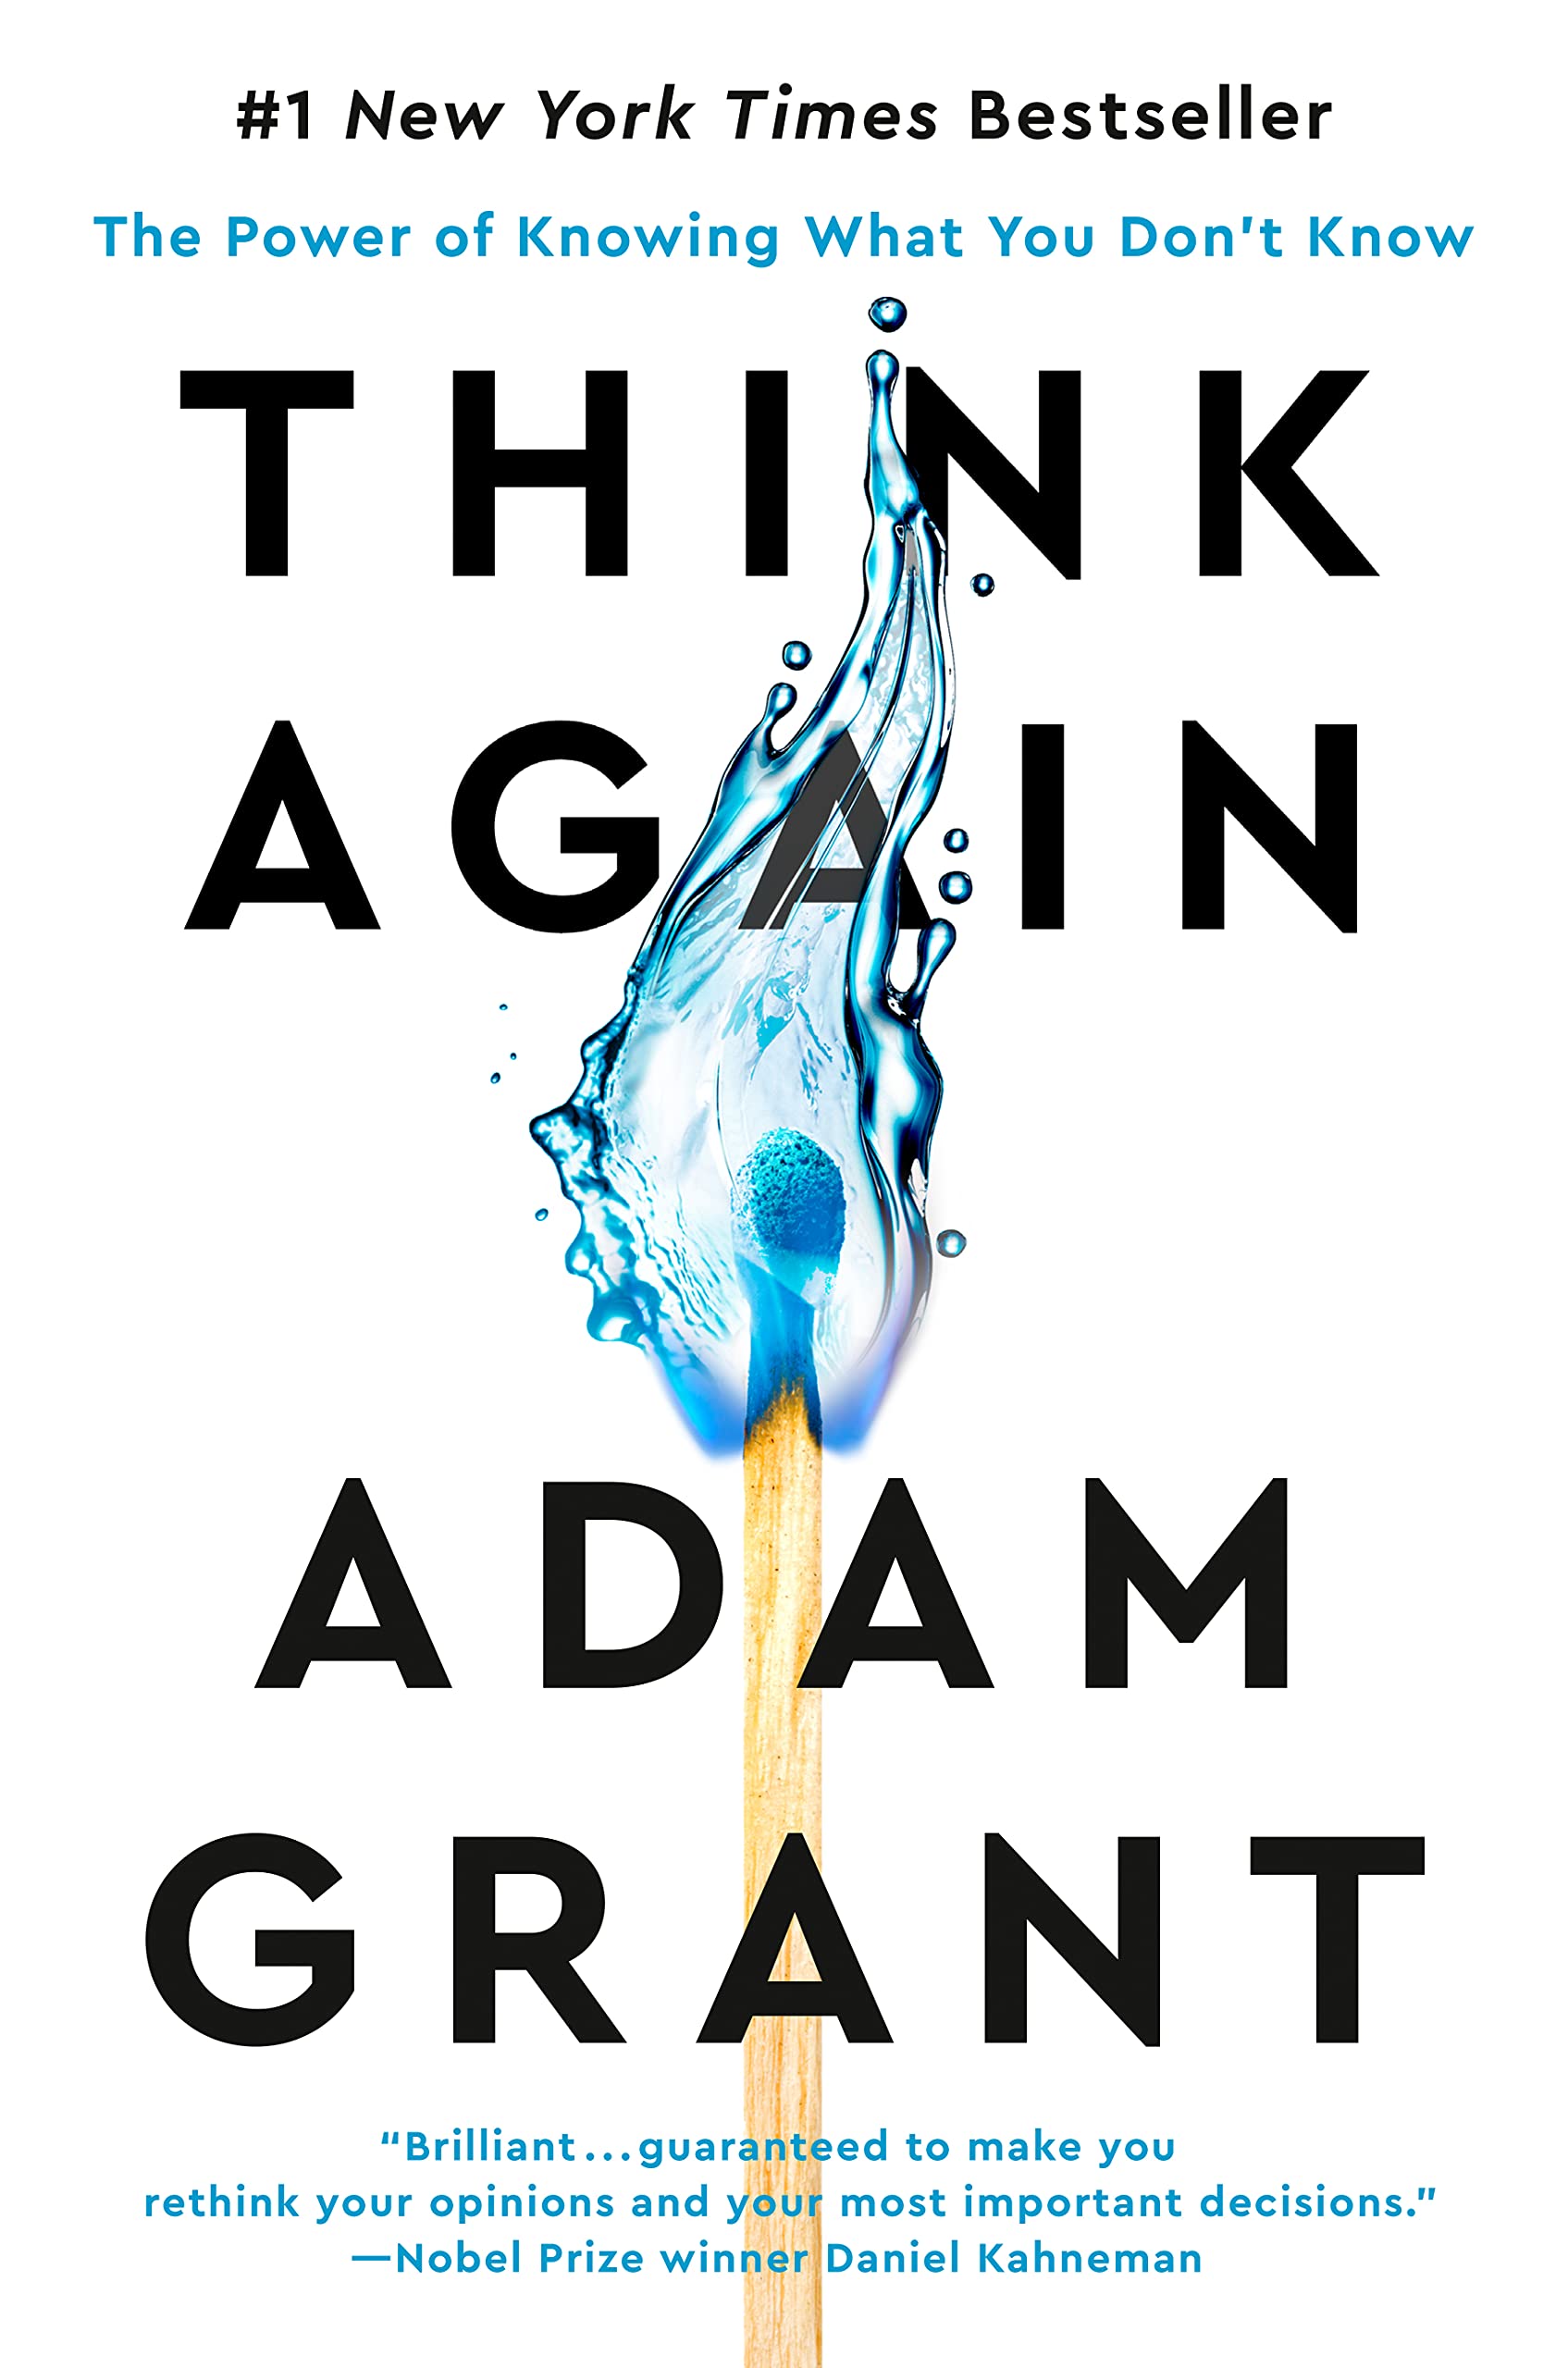 "Think Again" by Adam Grant